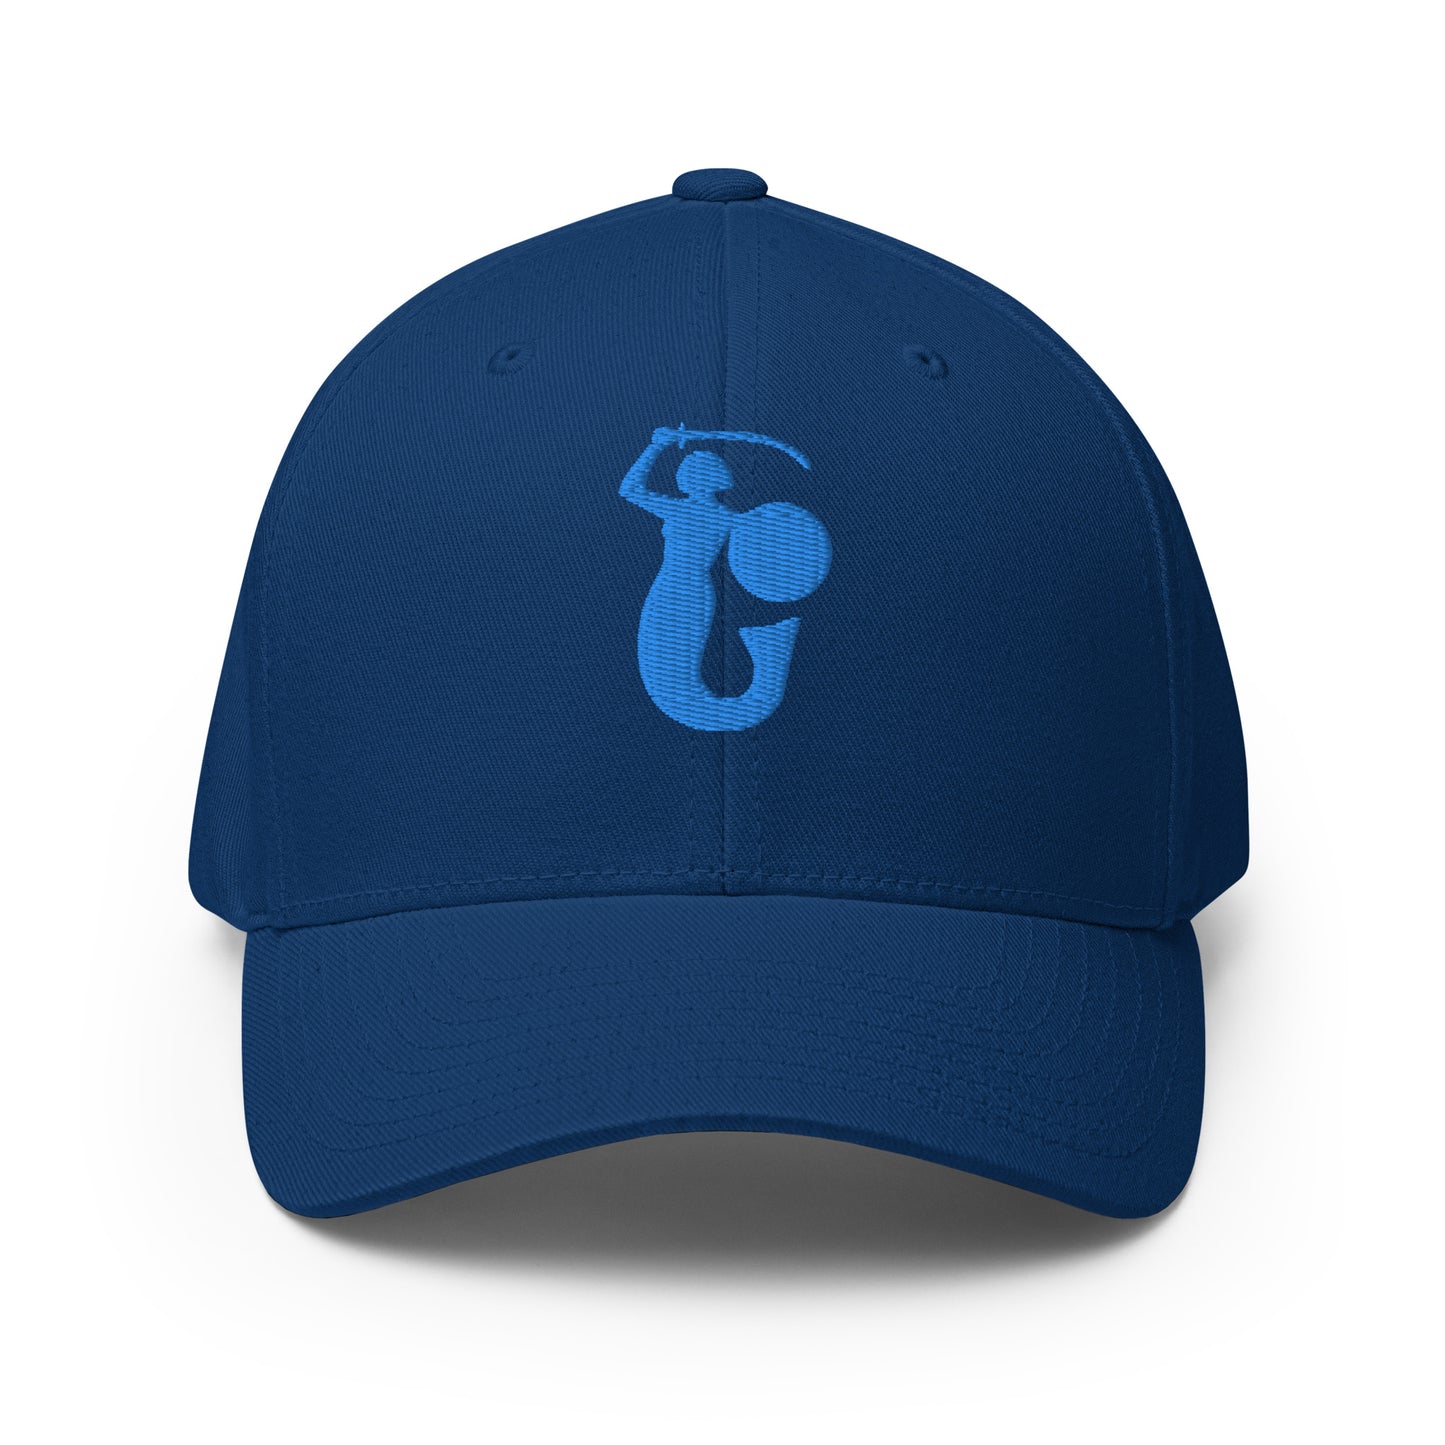 Baseball Cap with Mermaid Symbol